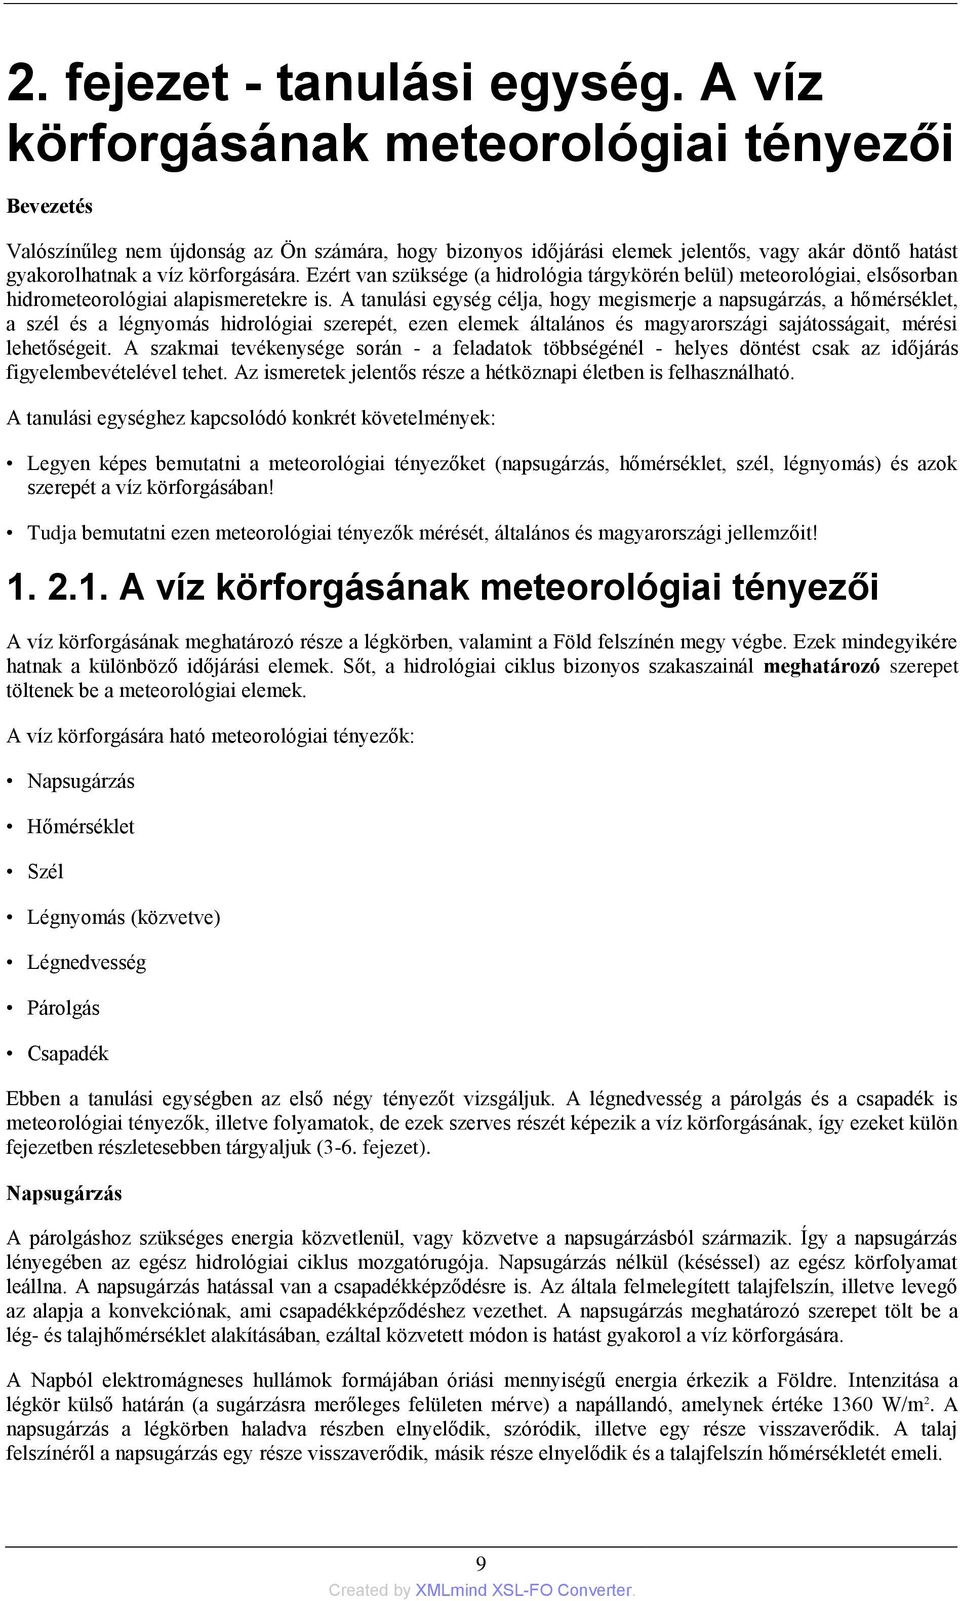 Hidrológia - Hidraulika Dr. Gombos, Béla - PDF Free Download